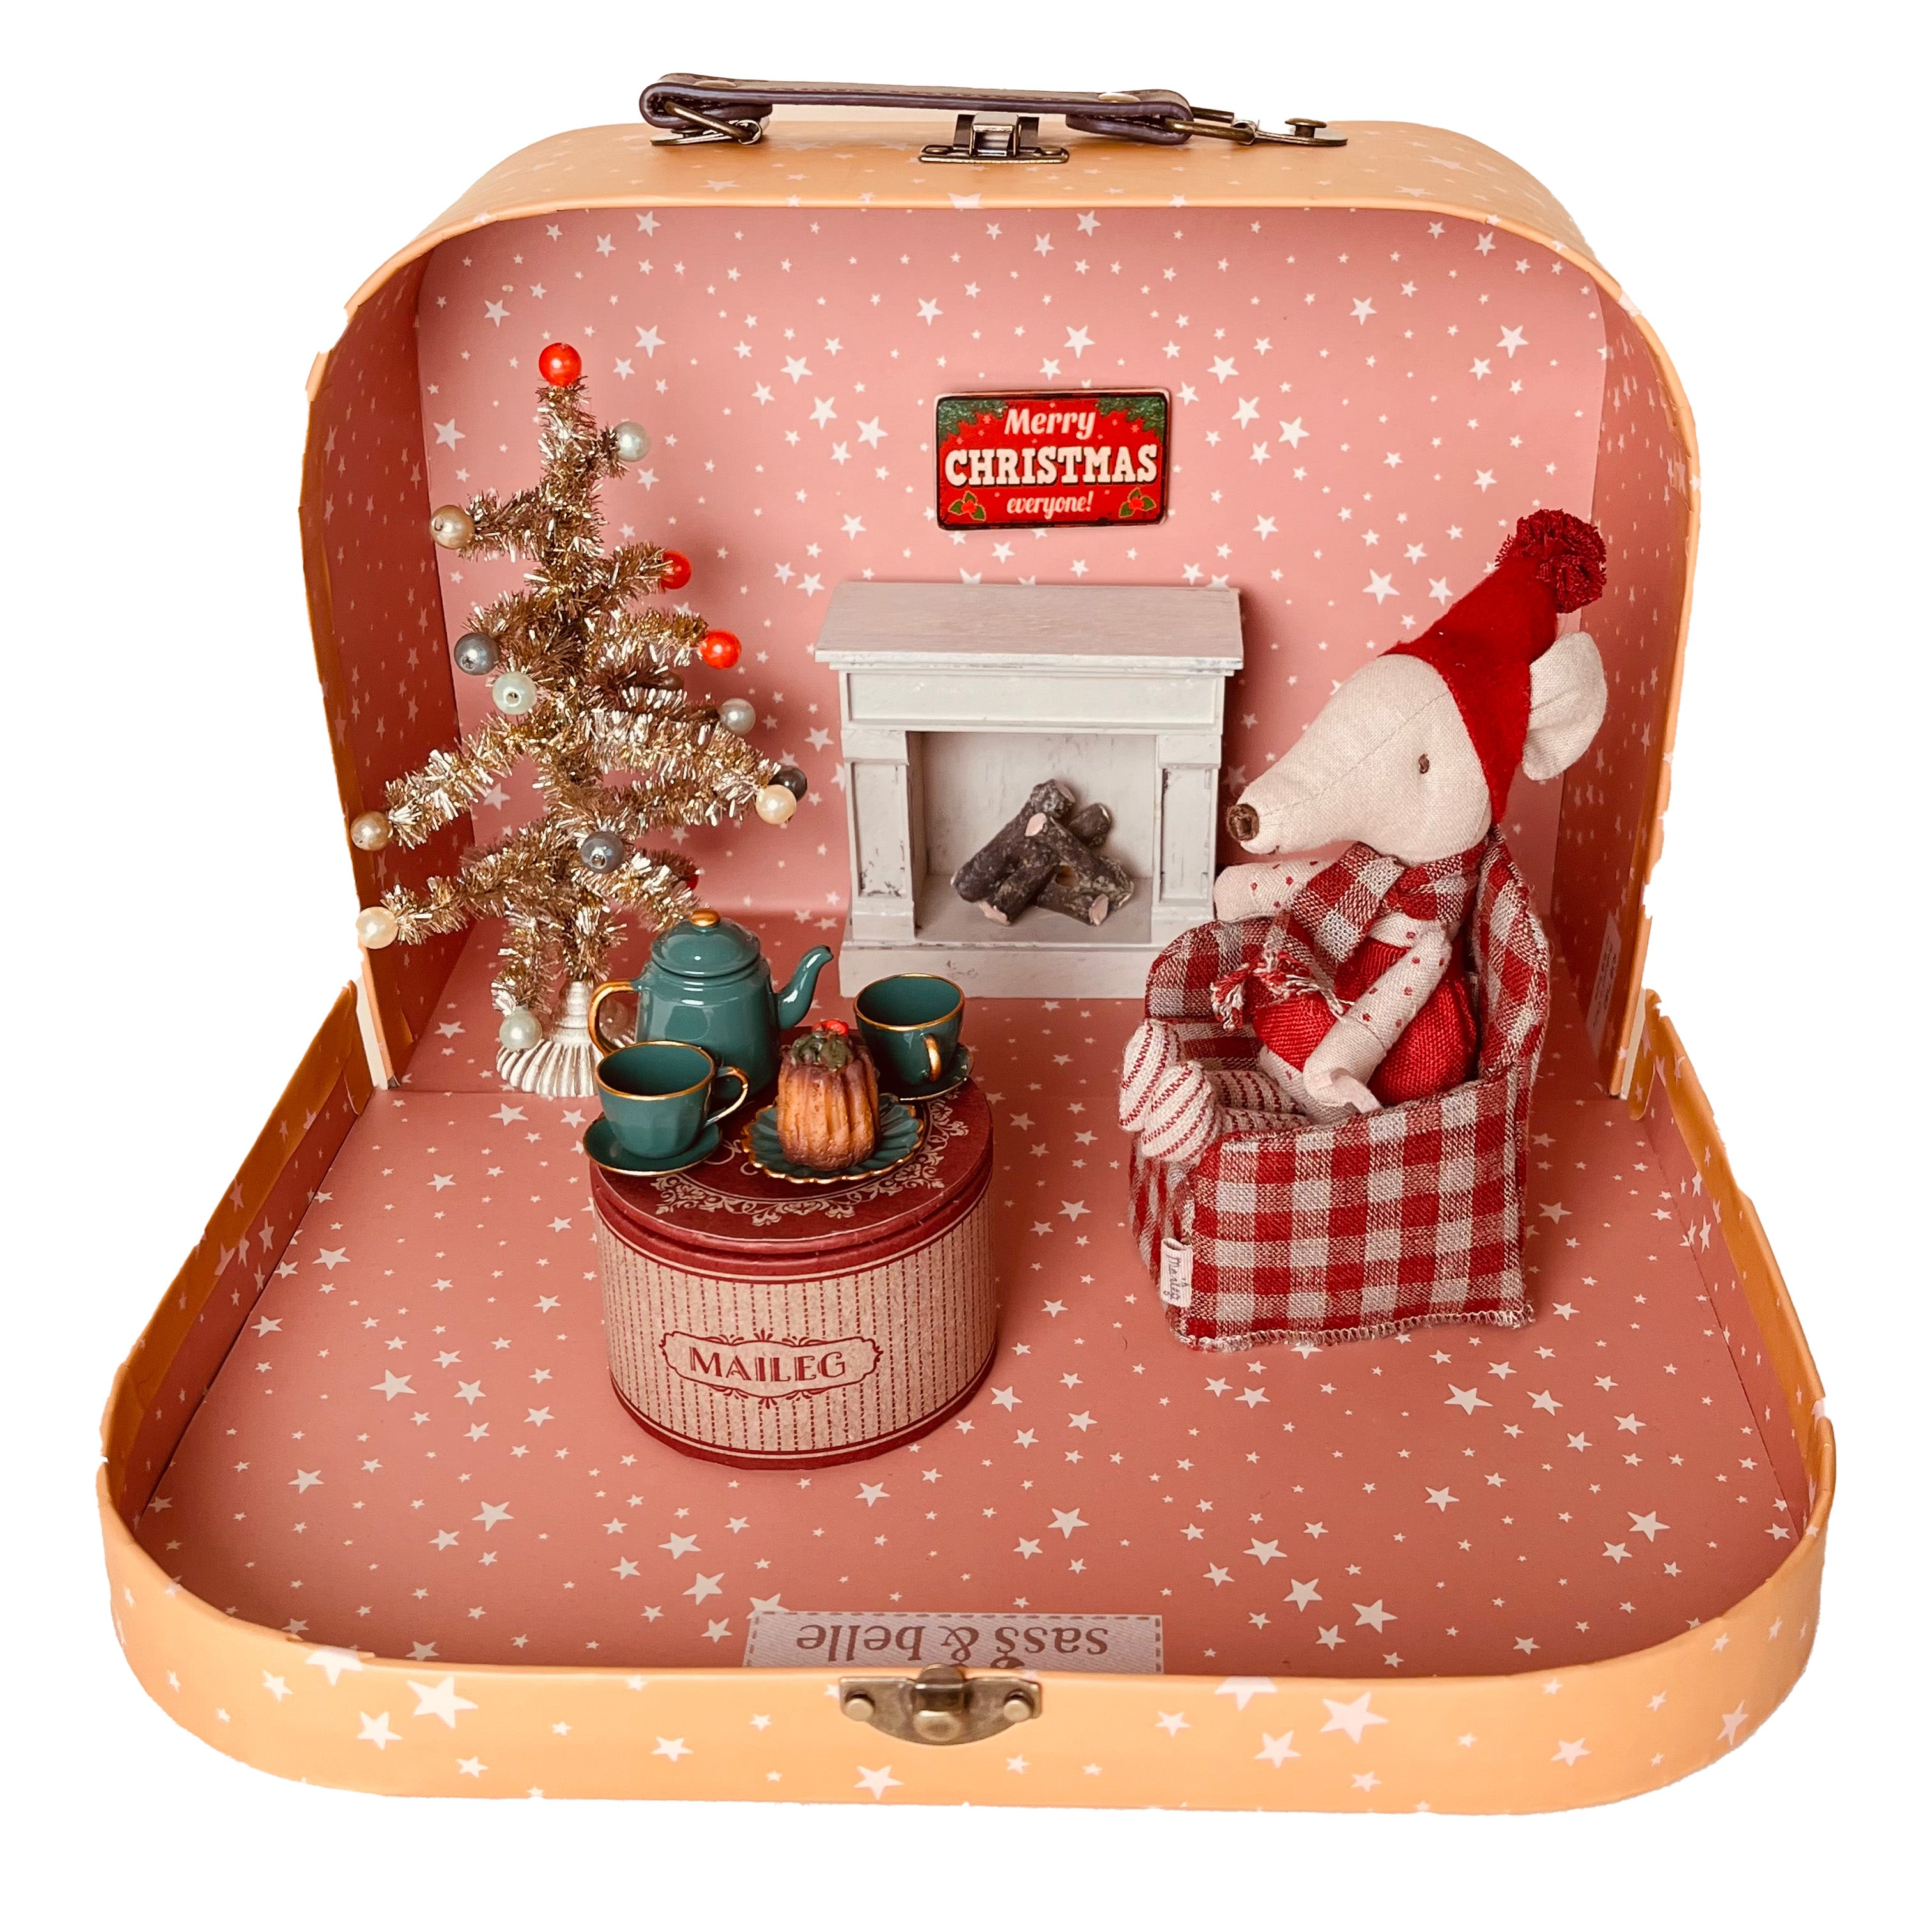 Maileg Christmas Mouse, Suitcase Set - Boy or Girl?